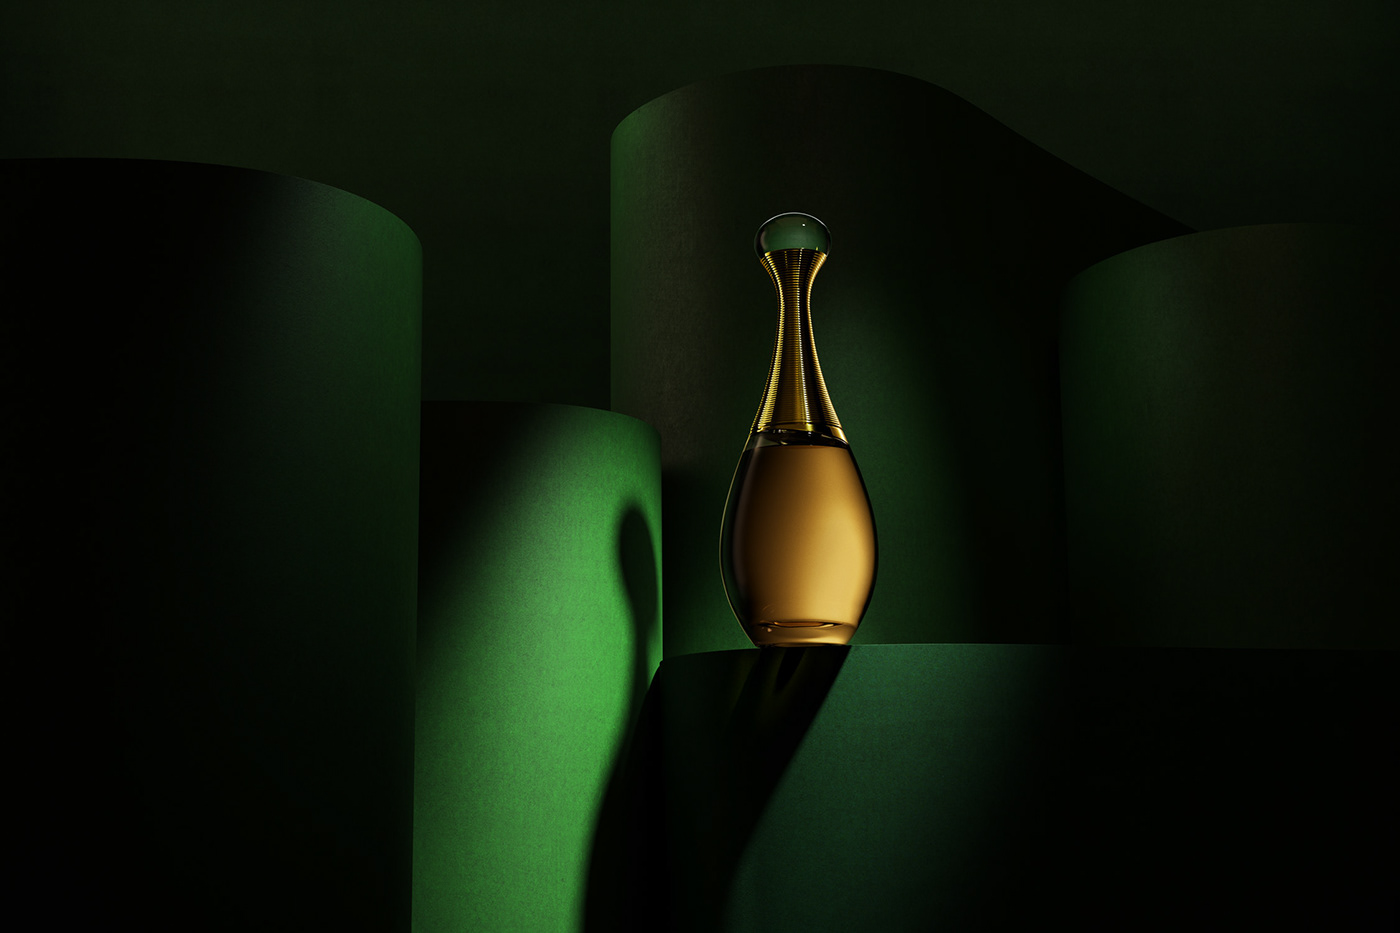 blender blender3d CGI fragance green perfume product Product Photography still life stilllife